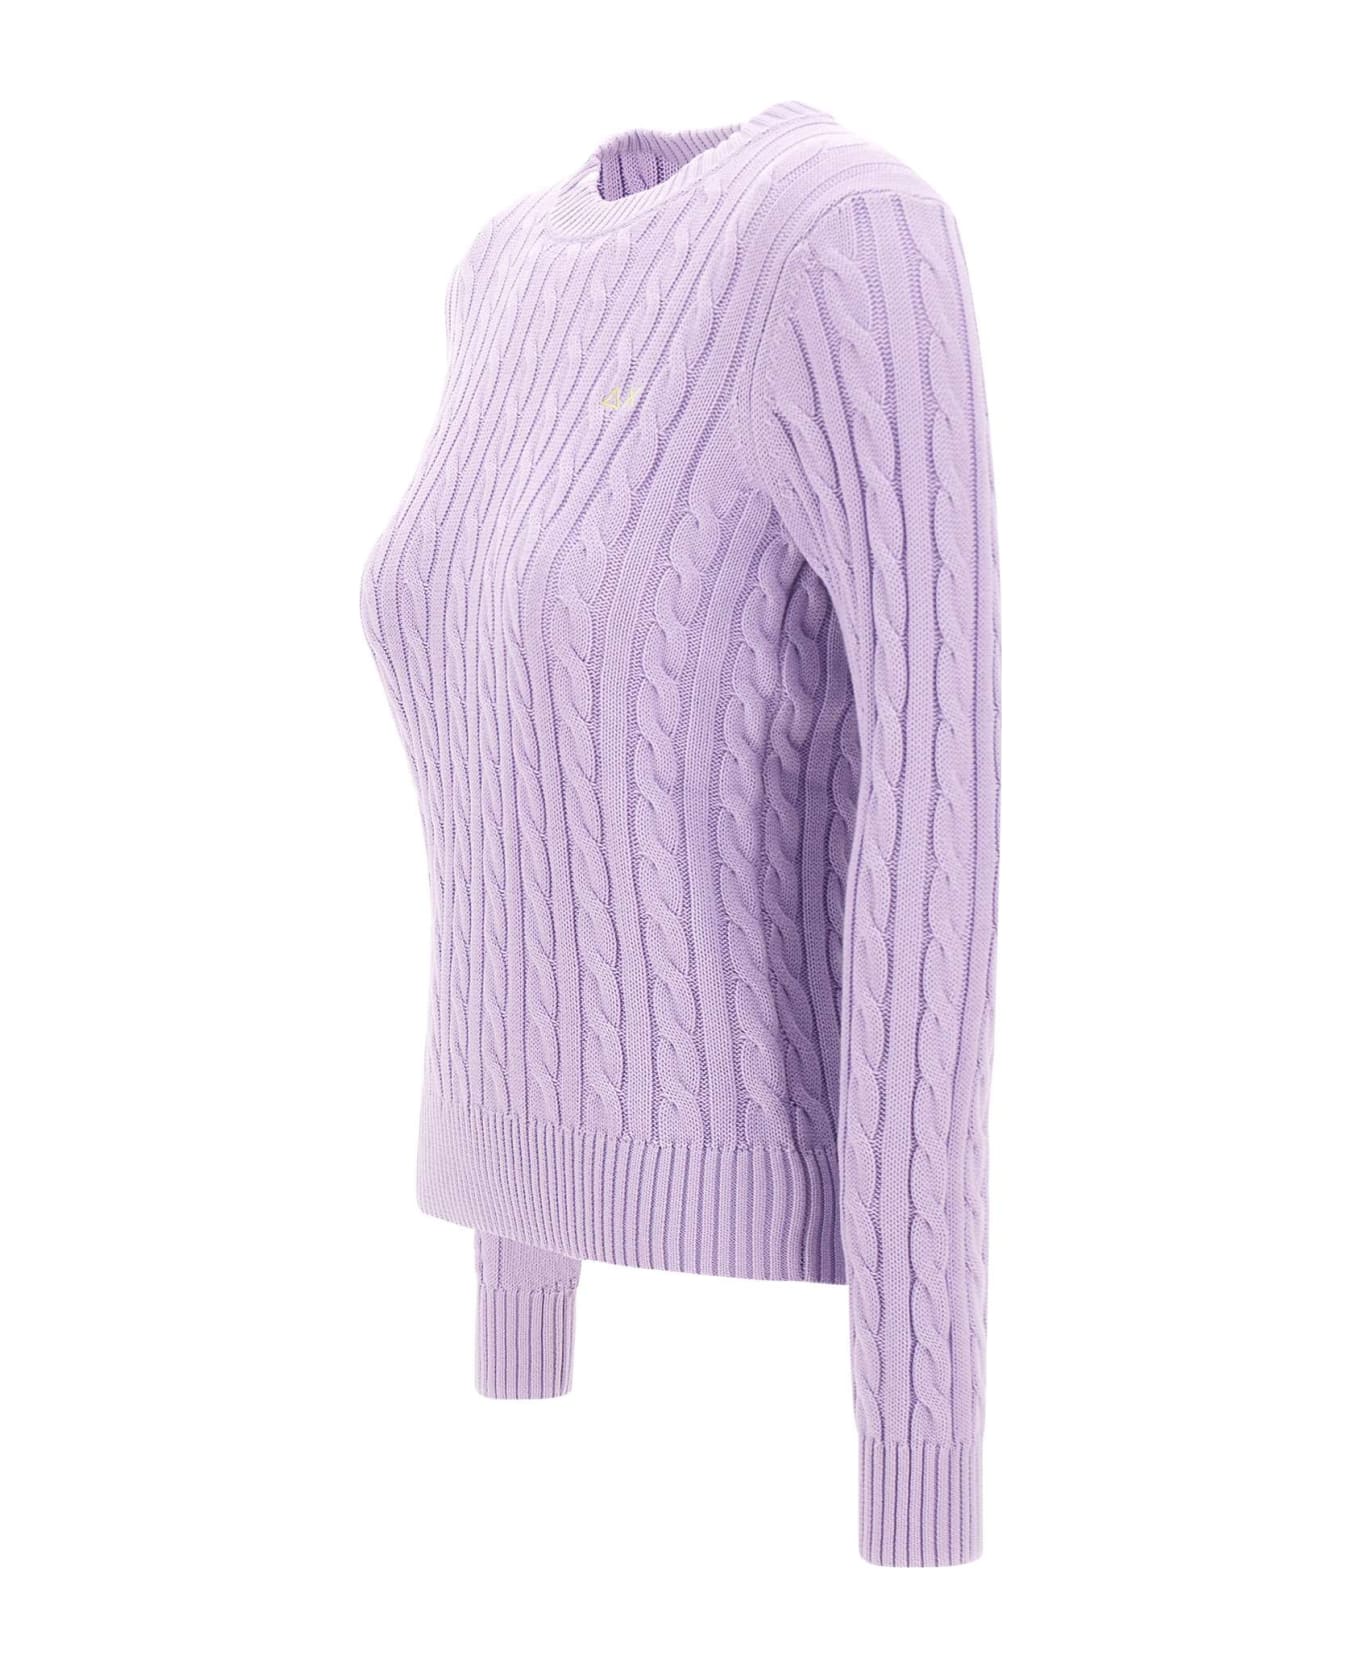 Sun 68 'round Neck Cable' Sweater Cotton